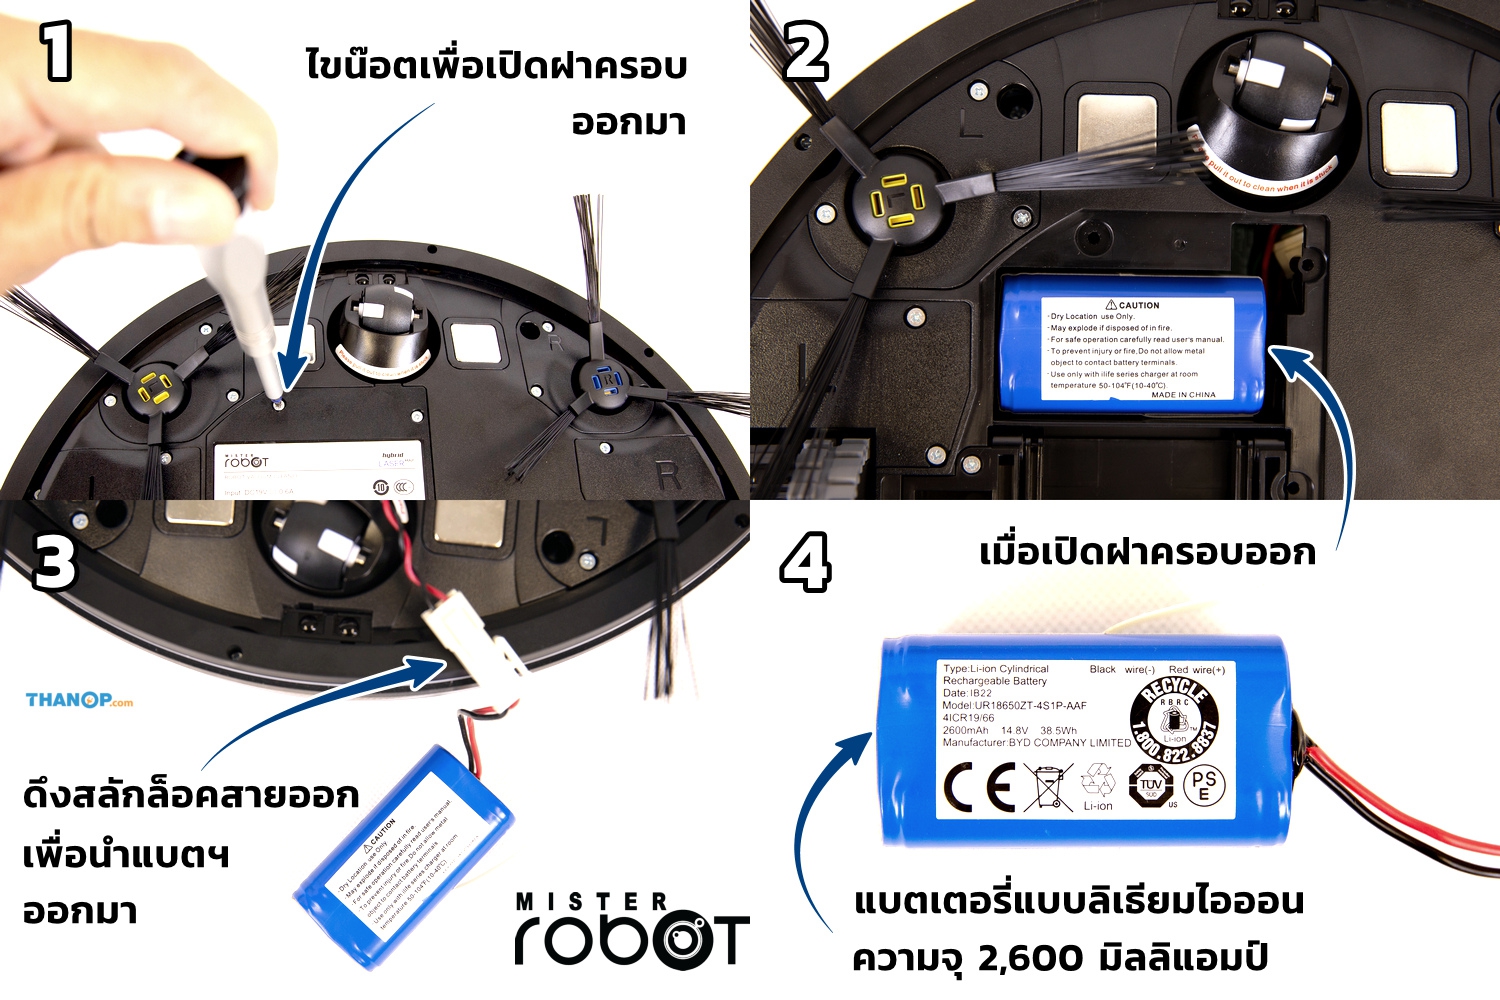 mister-robot-hybrid-laser-map-battery-removal